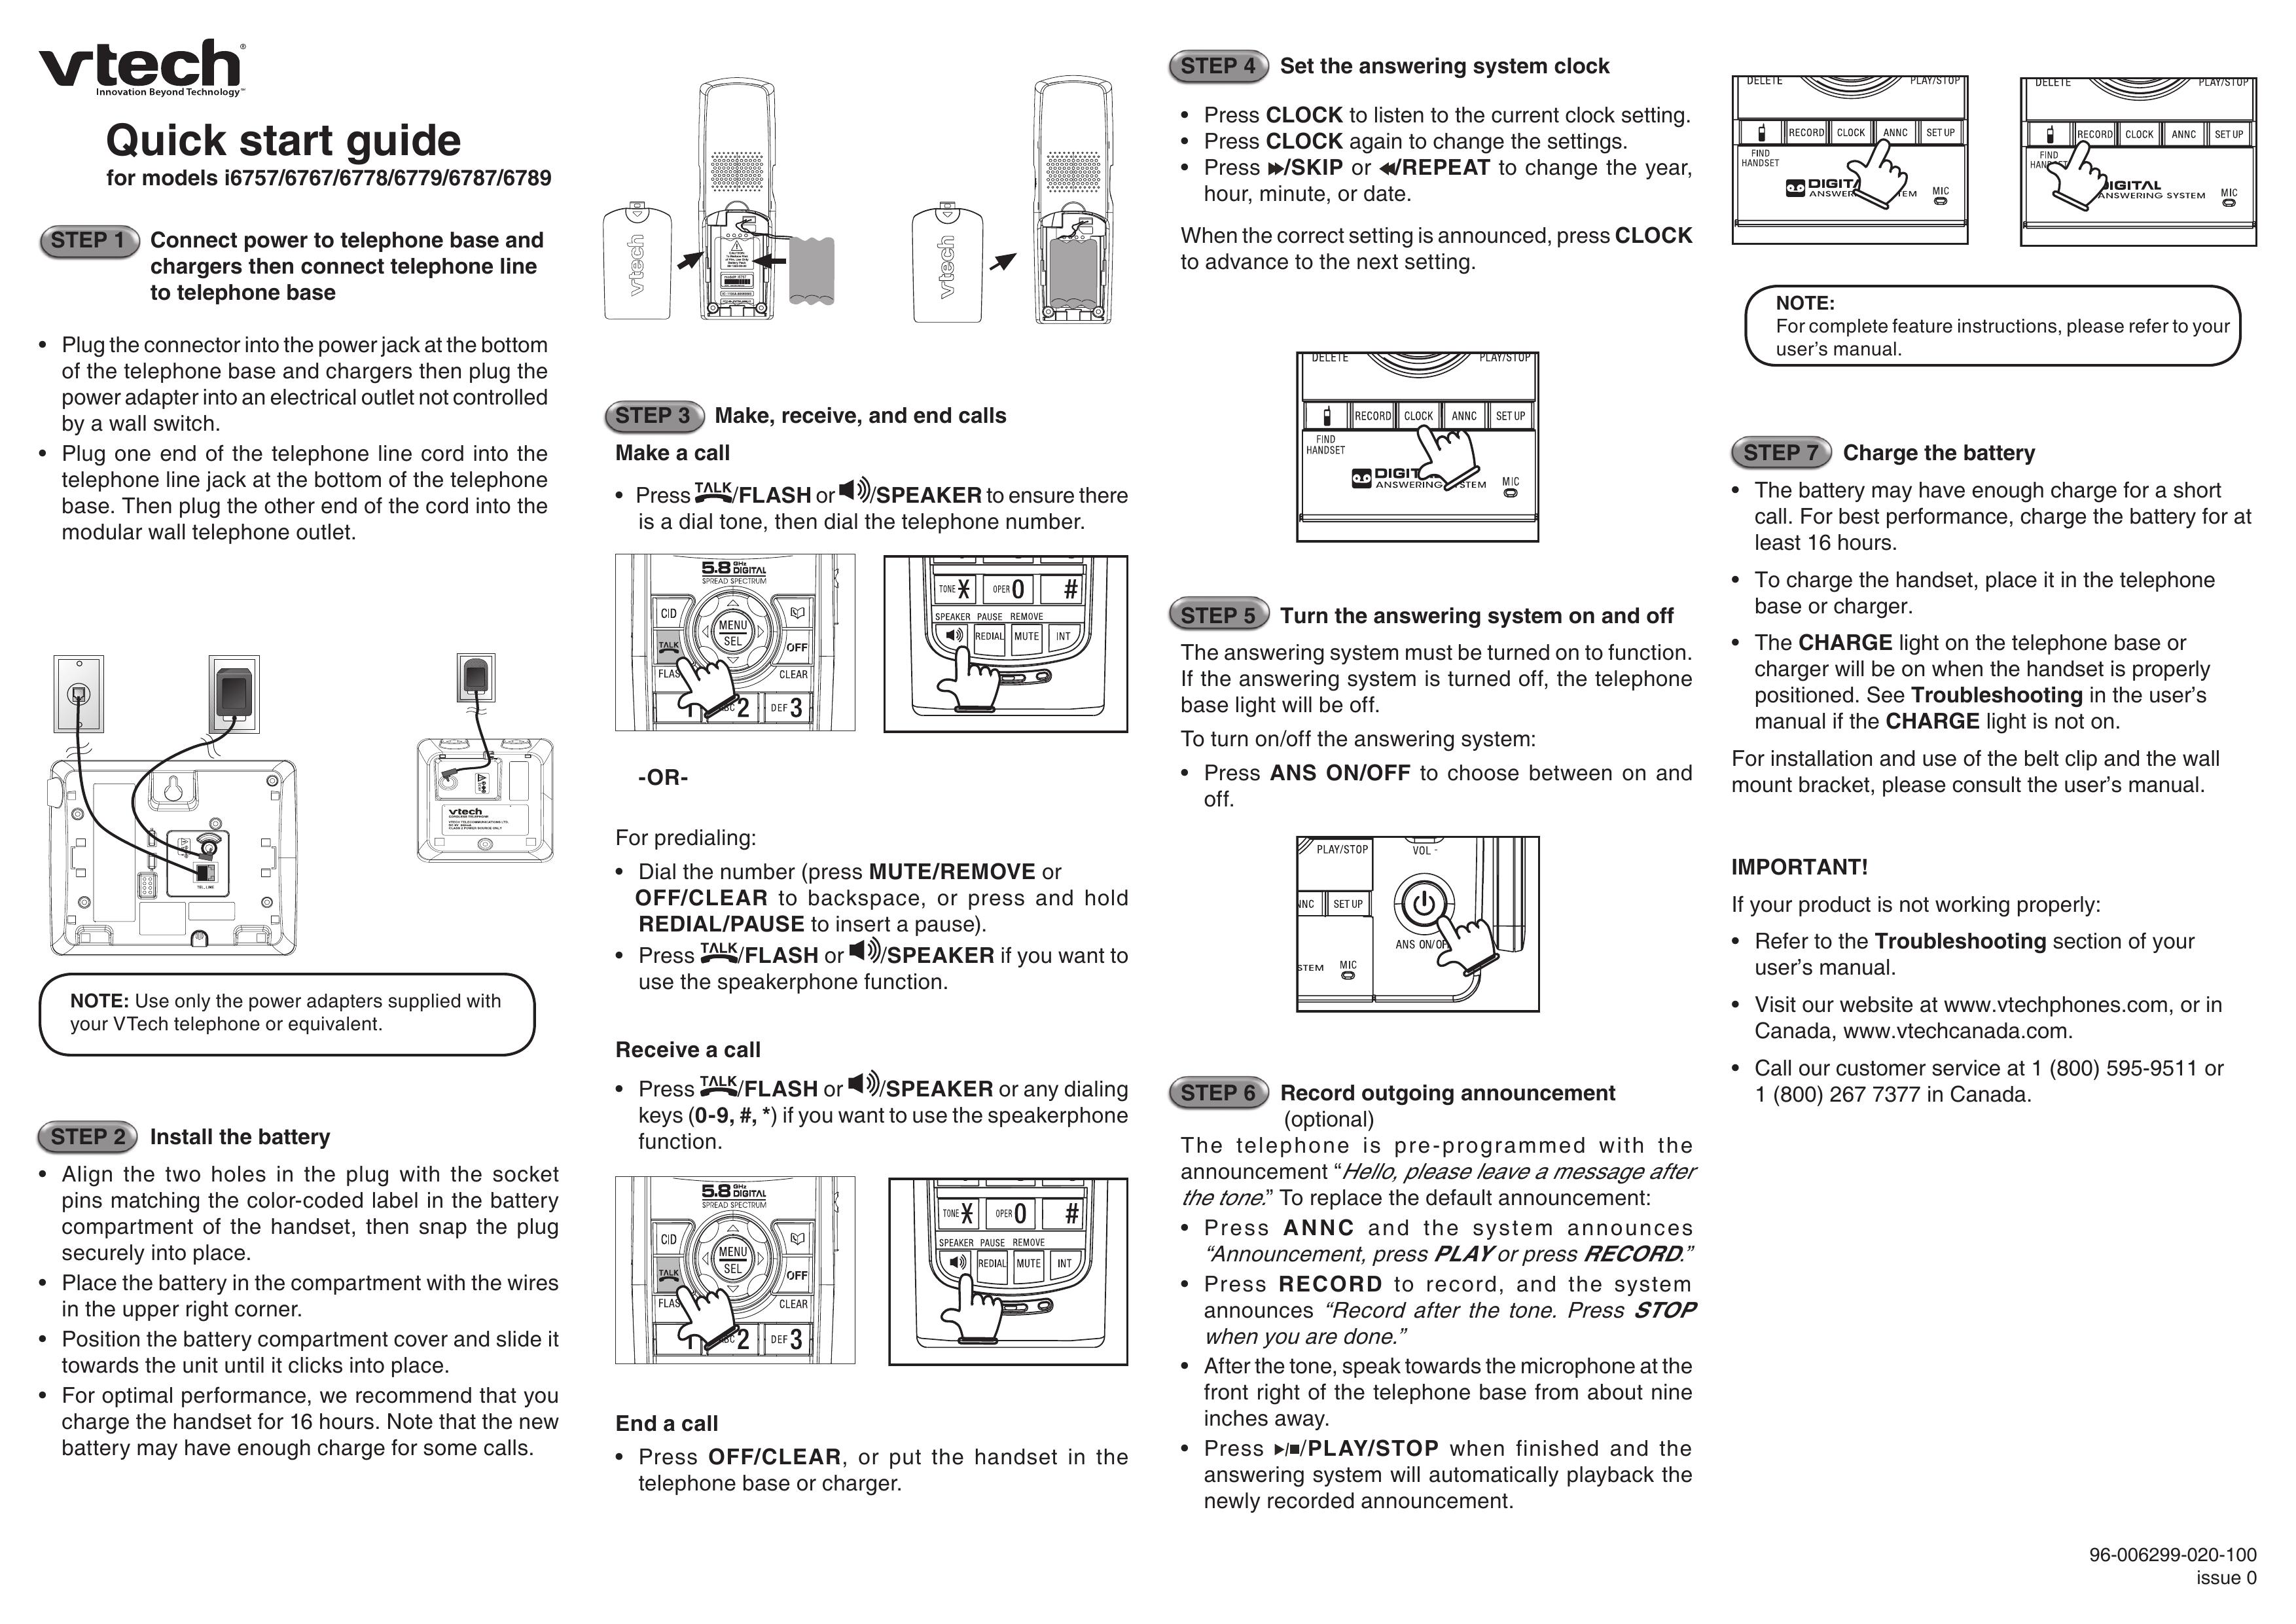 VTech 6789 Landscape Lighting User Manual